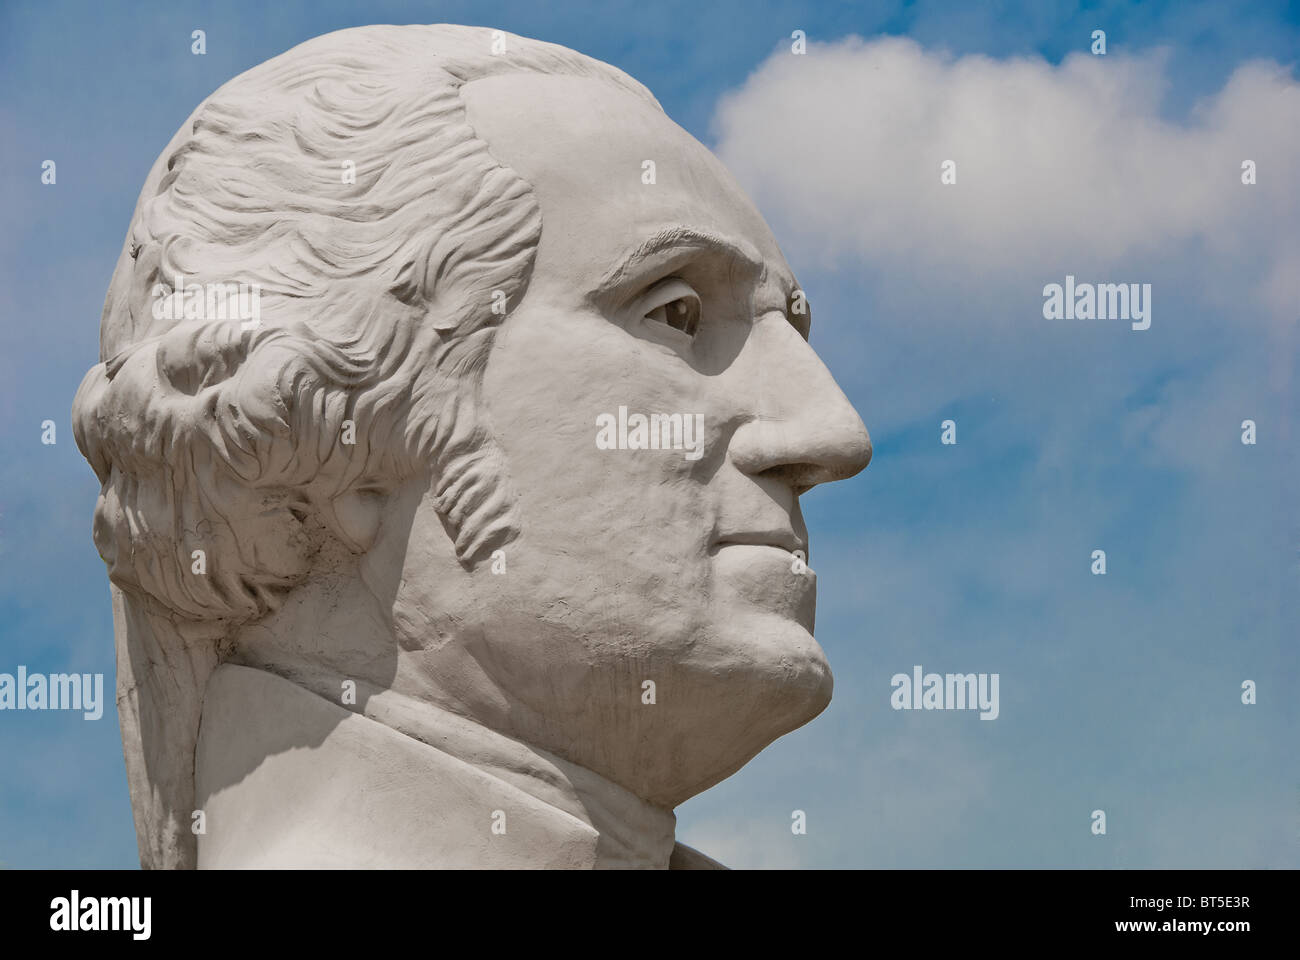 George Washington, 1st President of USA on 'Mount Rush Hour' by sculptor David Adickes, Houston, Texas, USA Stock Photo